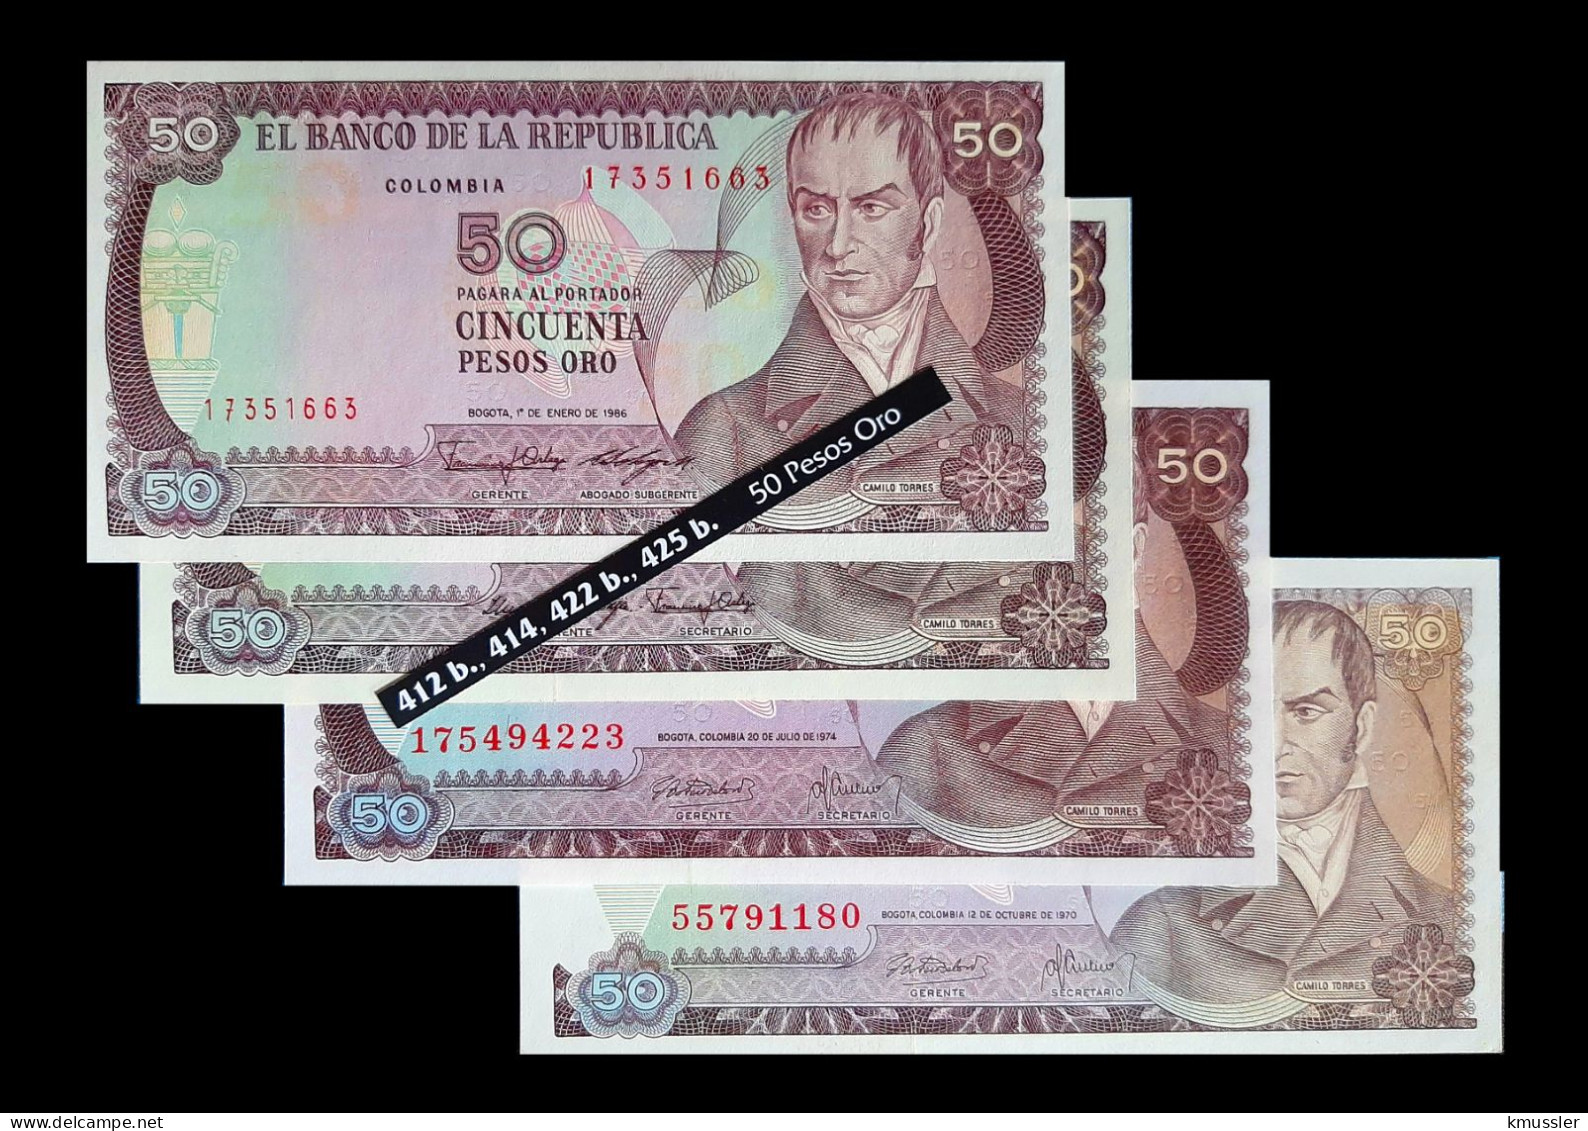 # # # 4 X Banknoten Kolumbien (Colombia) 50 Pesos Oro UNC # # # - Colombie